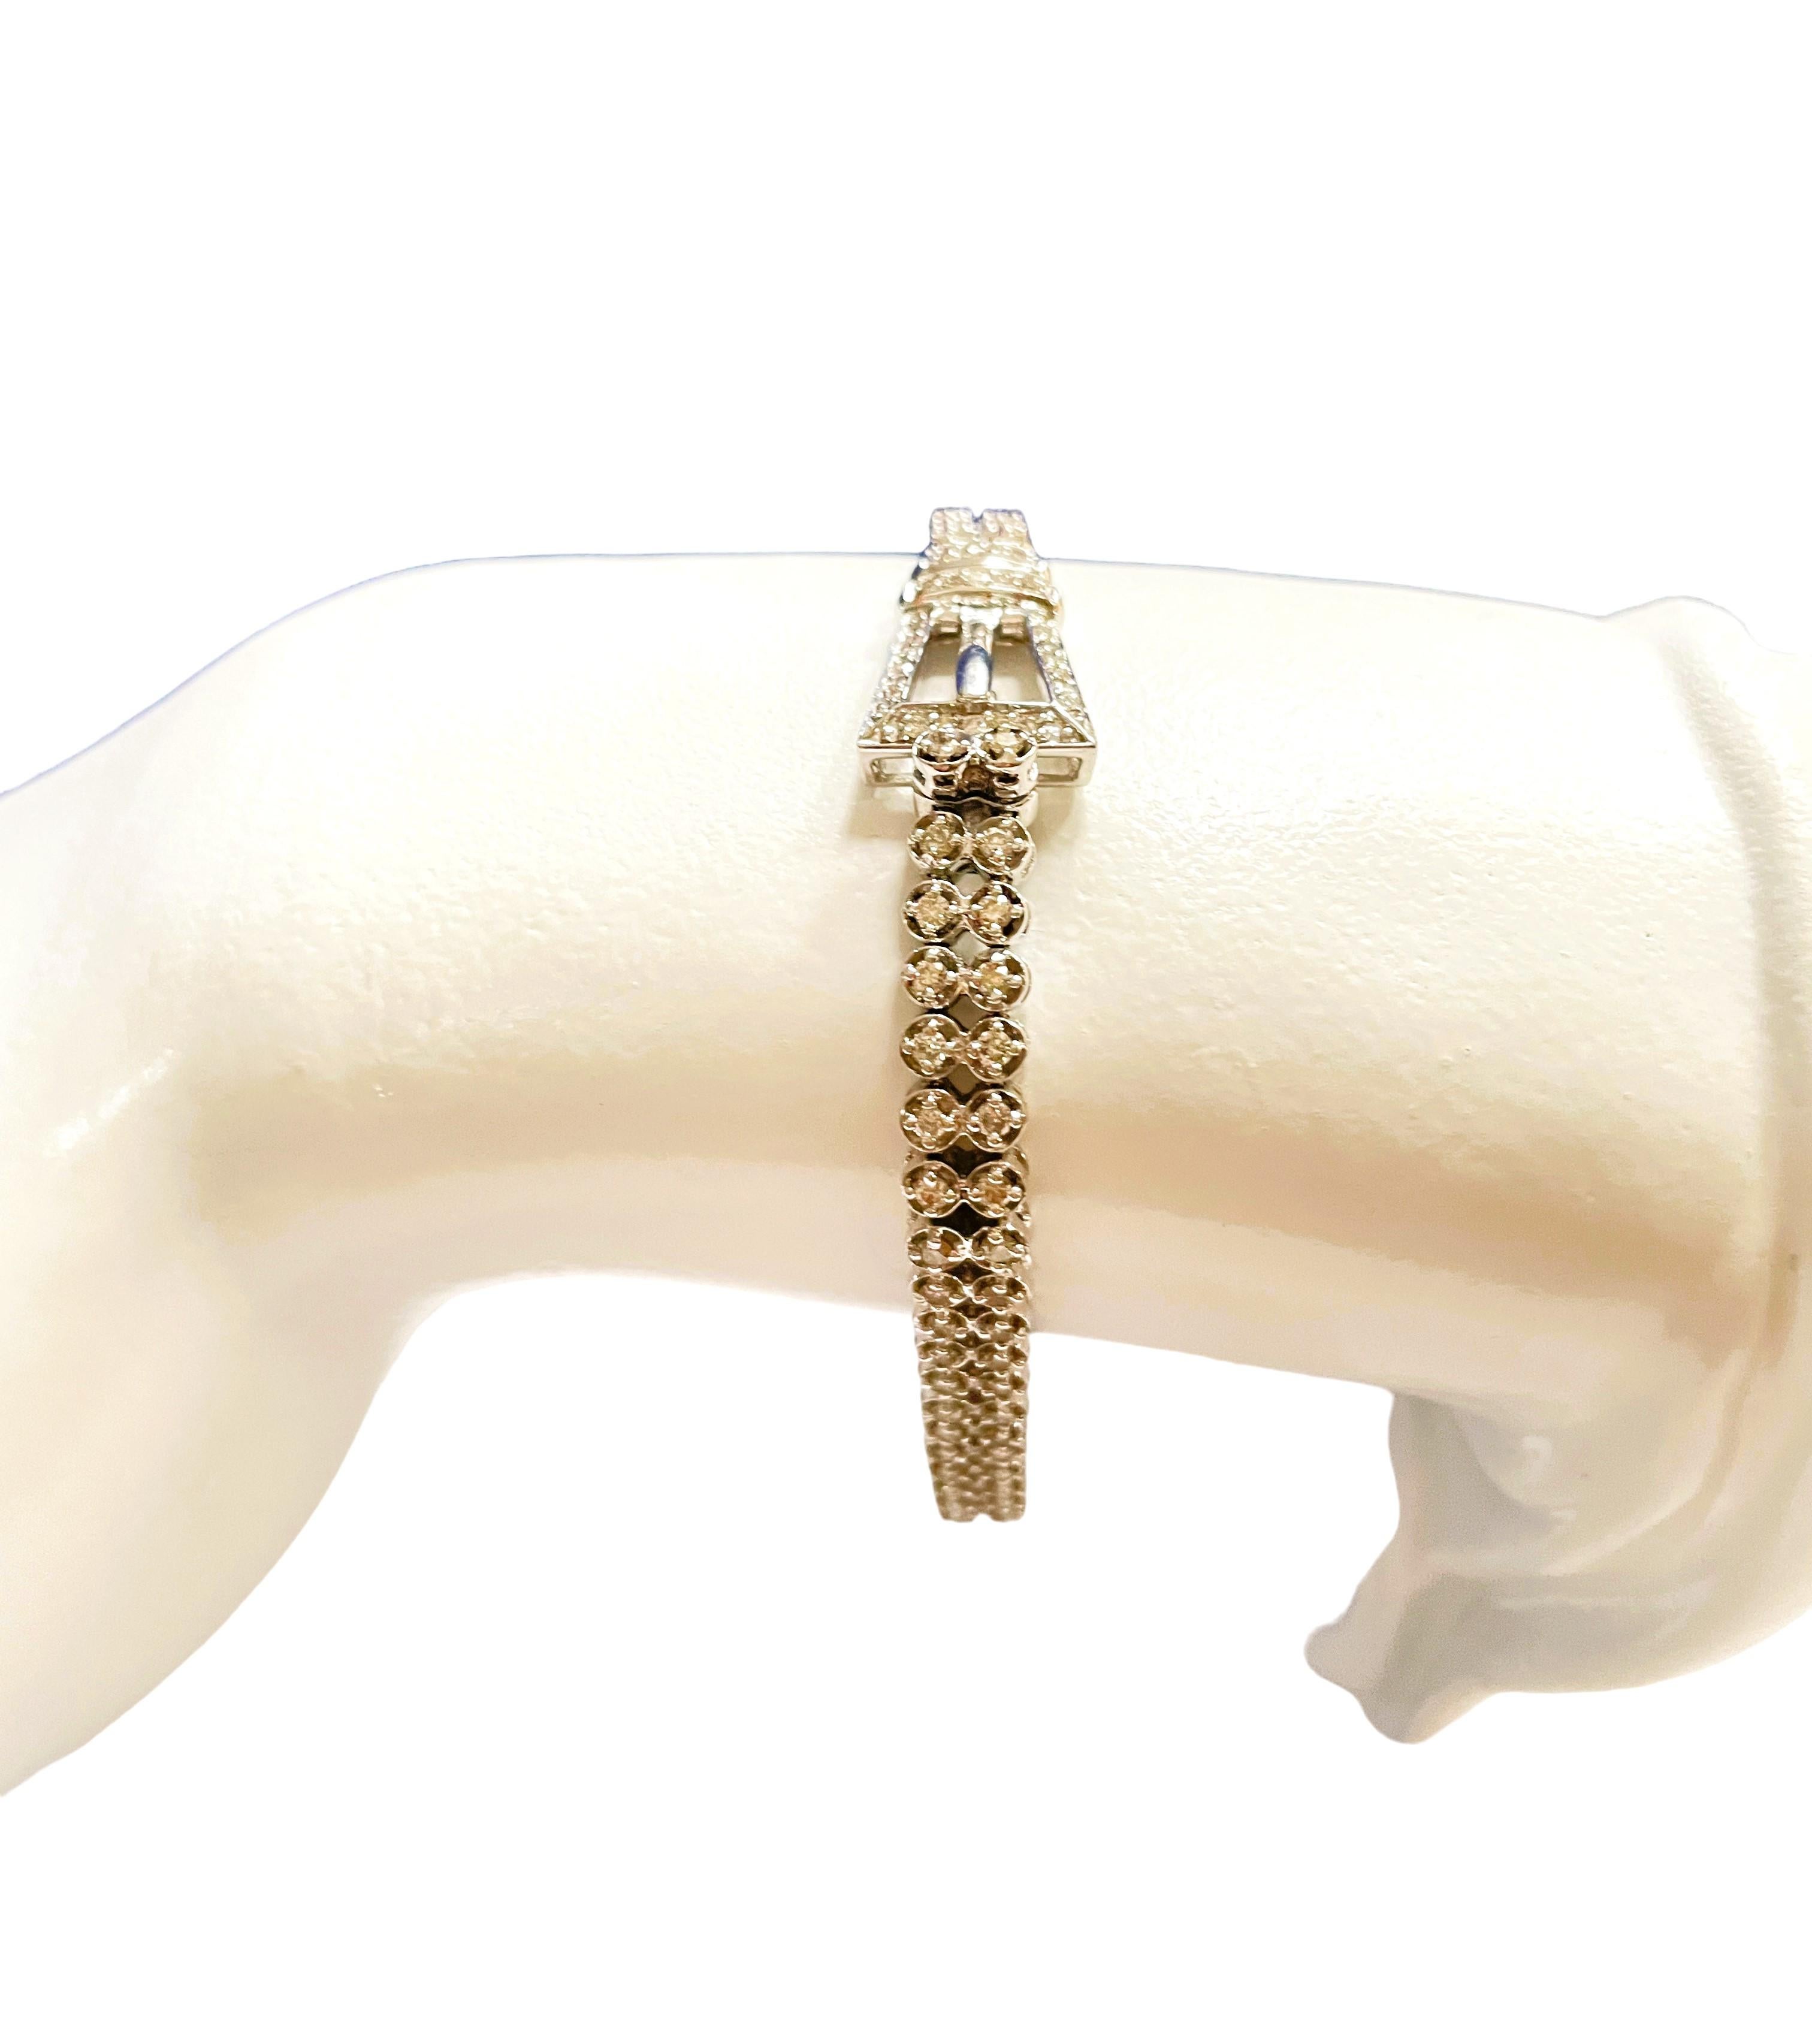 Vintage Handmade 14k White Gold 2 Carat Diamond Buckle Bracelet with Appraisal 2